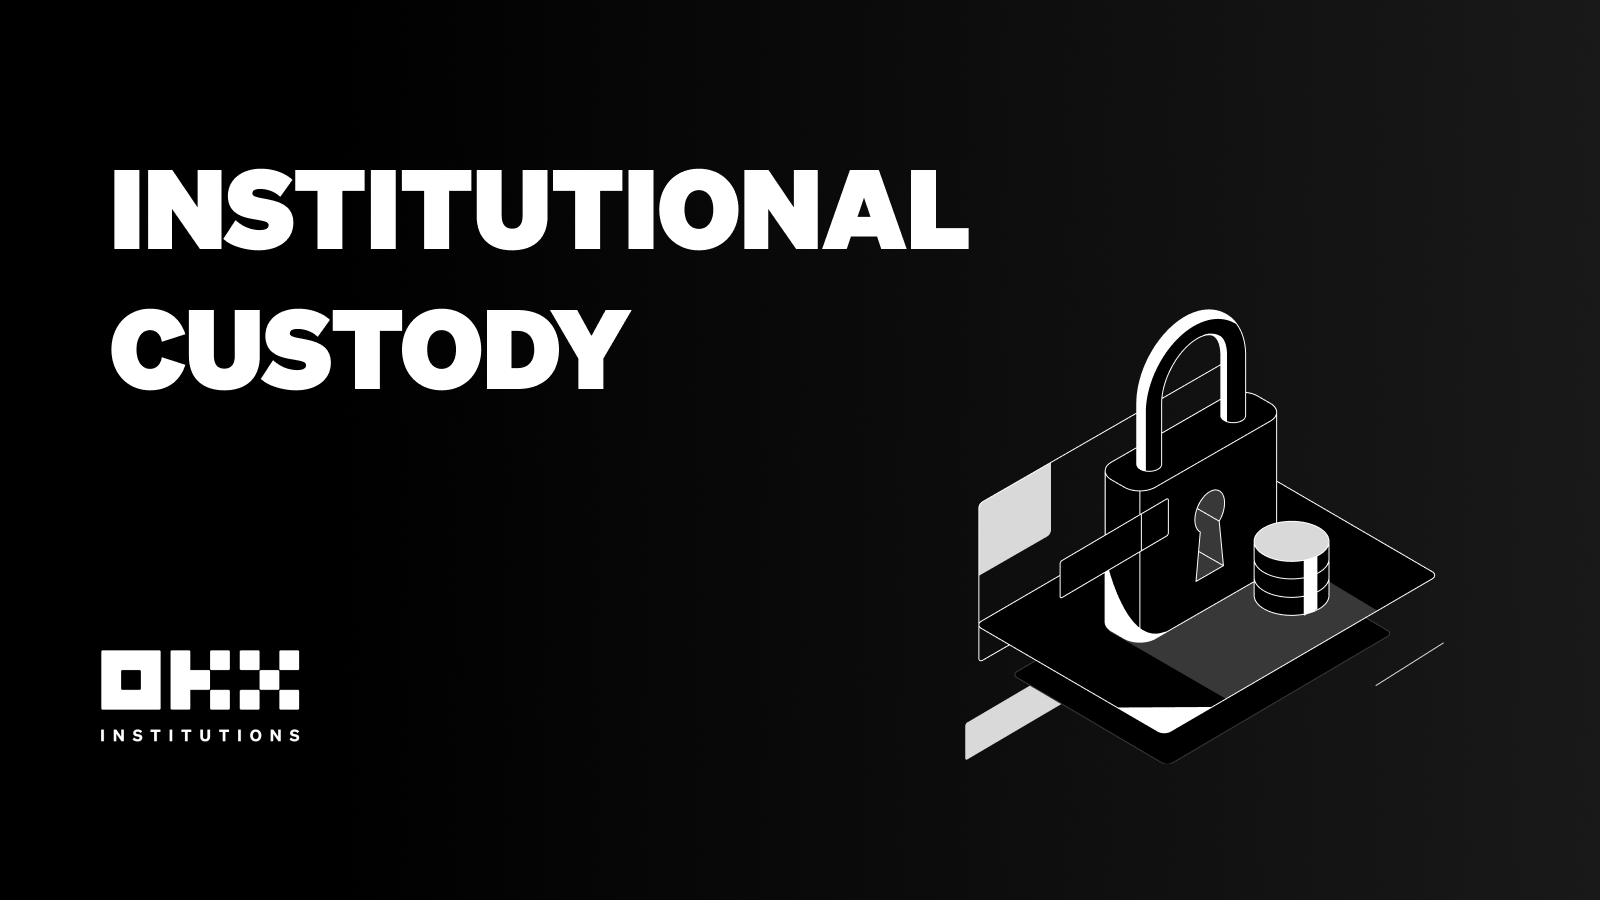 The future of institutional custody is at OKX